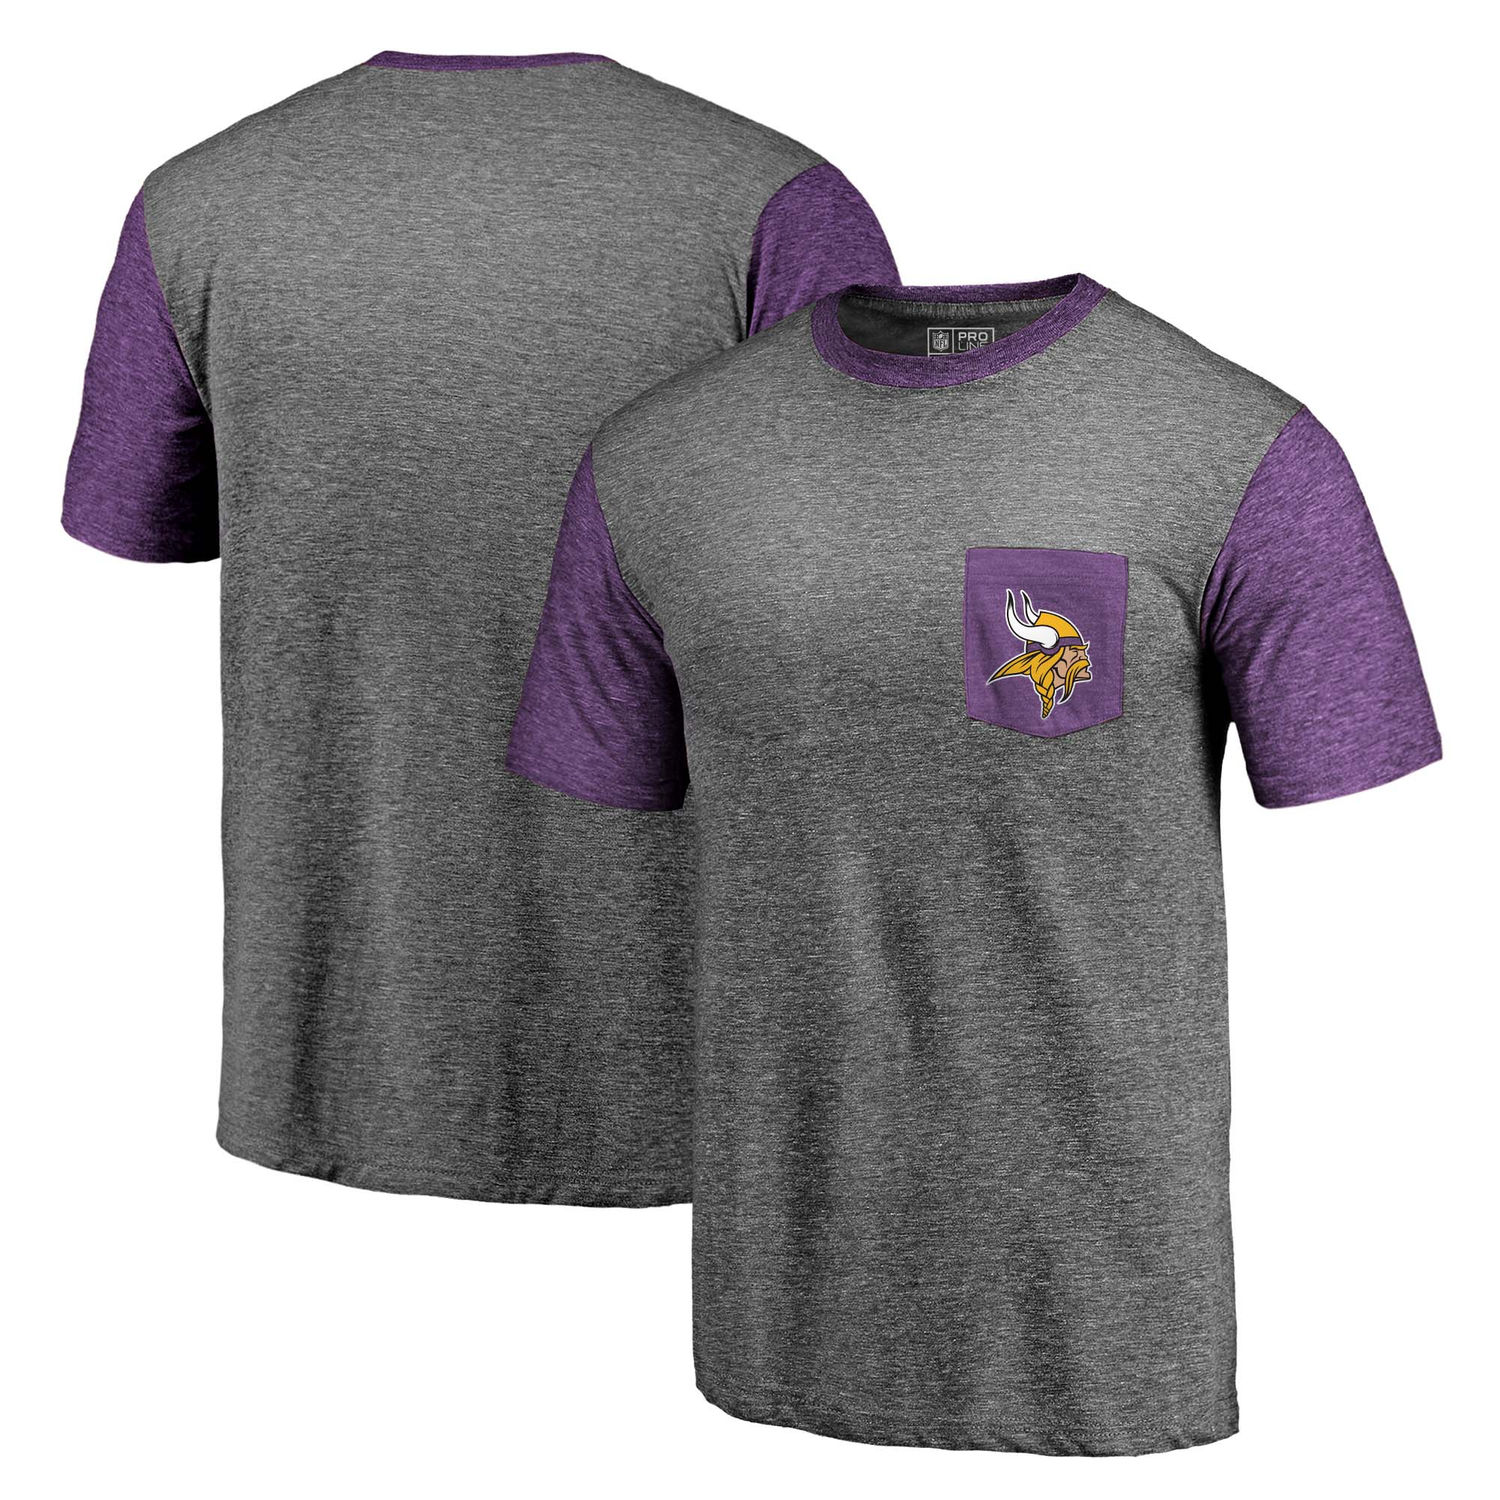 Men's Minnesota Vikings NFL Pro Line by Fanatics Branded Heathered Gray-Purple Refresh Pocket T-Shirt